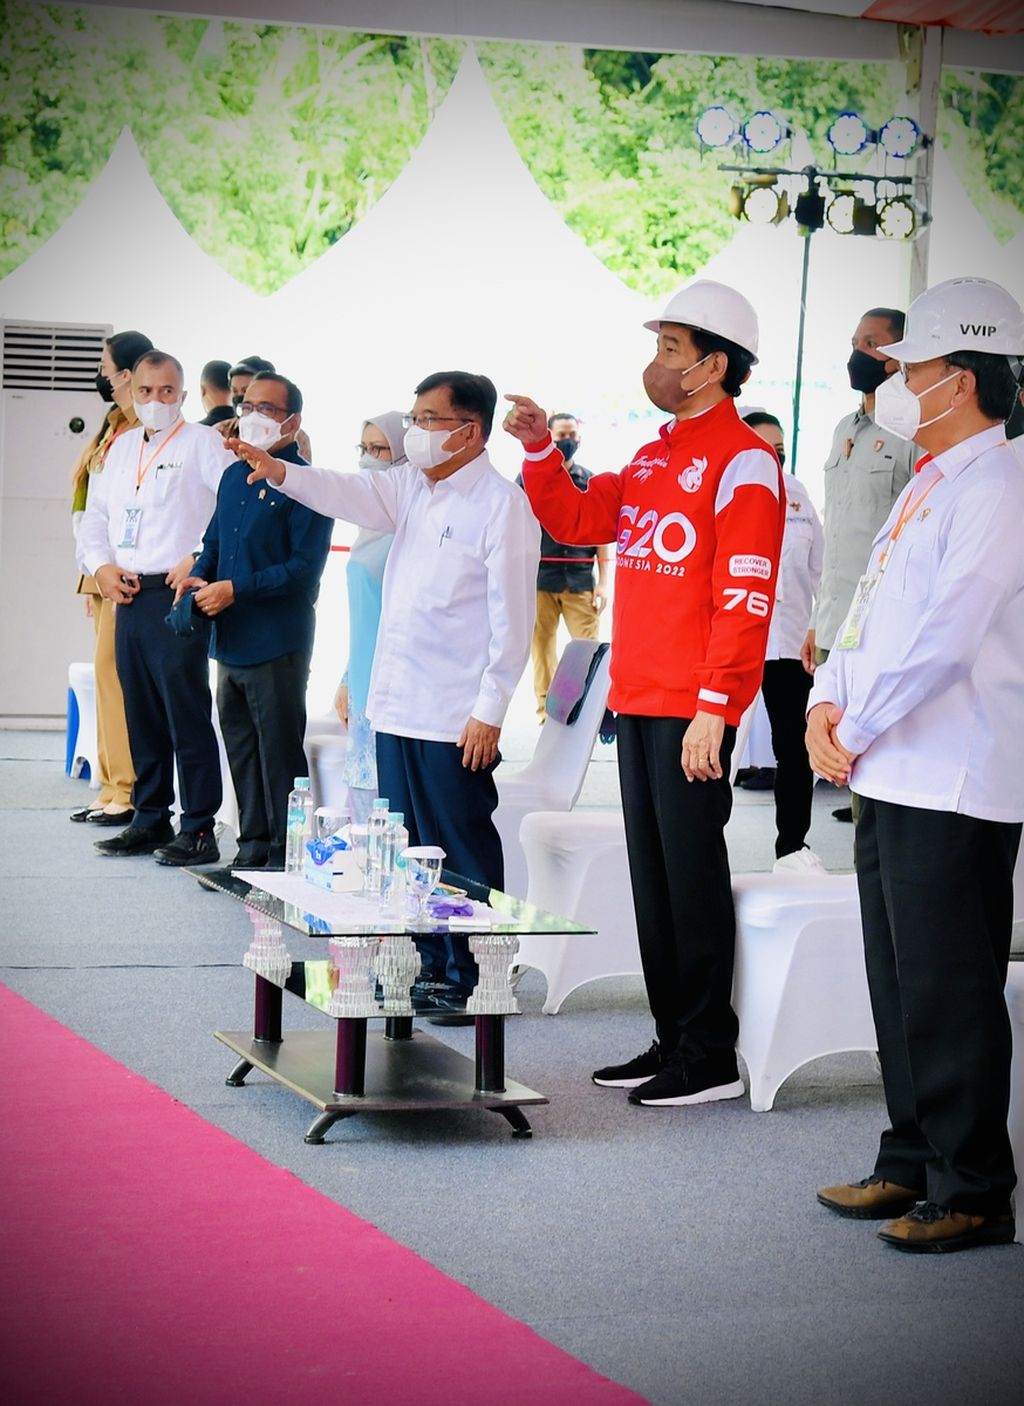 Presiden Joko Widodo didampingi Wakil Presiden ke-10 dan ke-12 RI yang sekaligus Founder Kalla Group, Jusuf Kalla, ketika meresmikan pembangkit listrik tenaga air PT Poso Energy di Poso, Sulawesi Tengah, Jumat (25/2/2022).